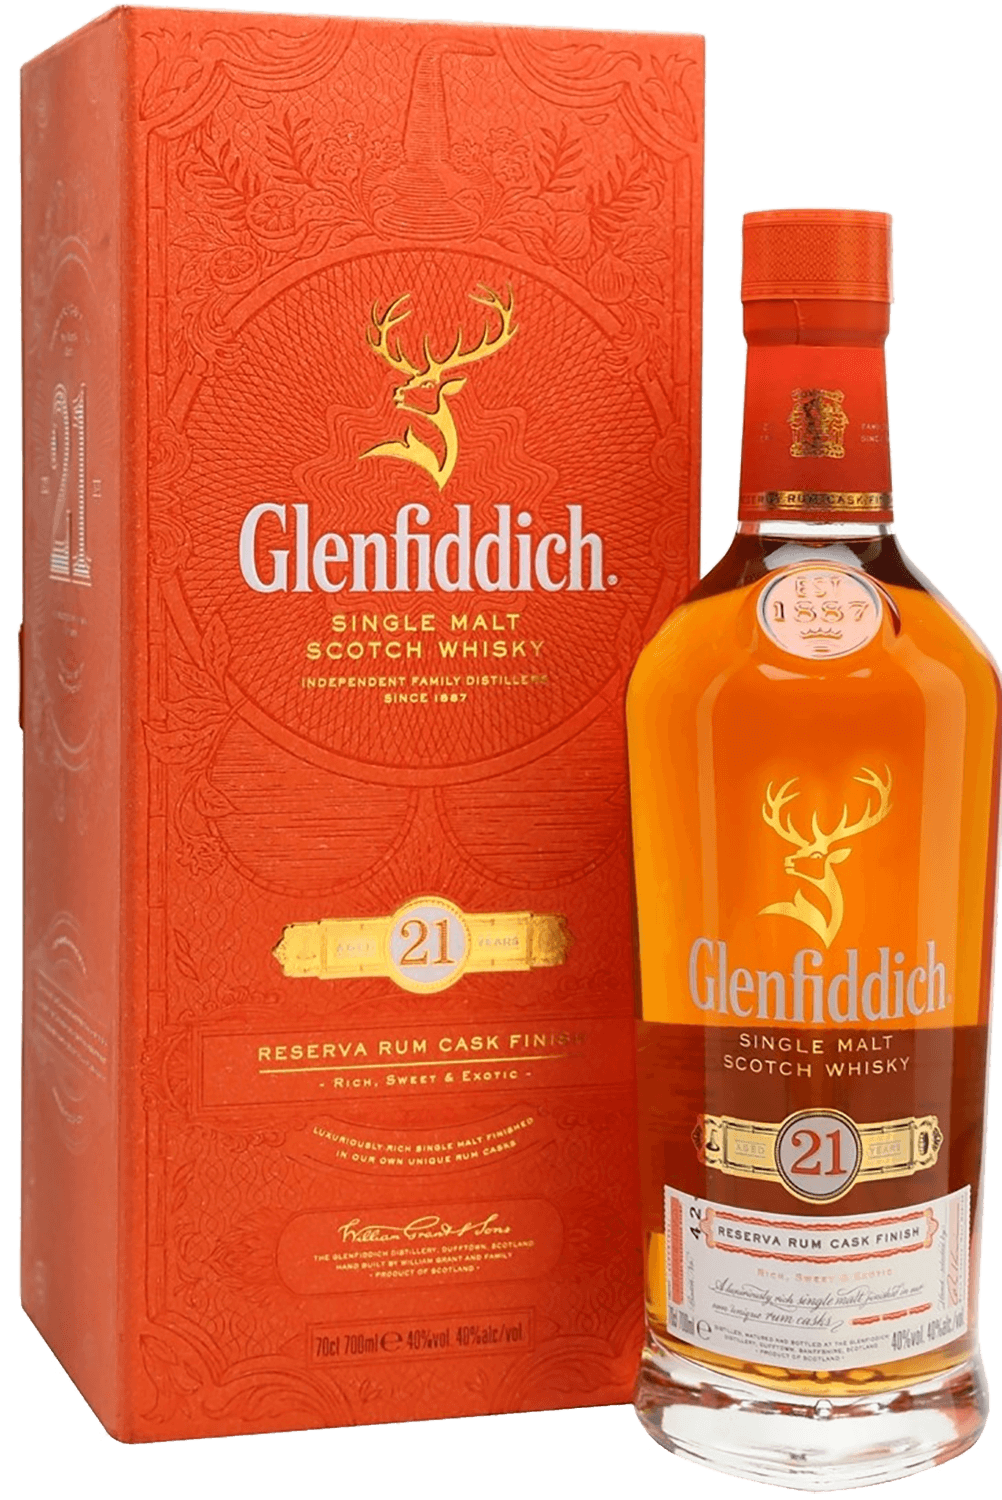 Glenfiddich Single Malt Scotch Whisky 21 yo (gift box) glenfiddich 12 y o single malt scotch whisky gift box with 2 glasses